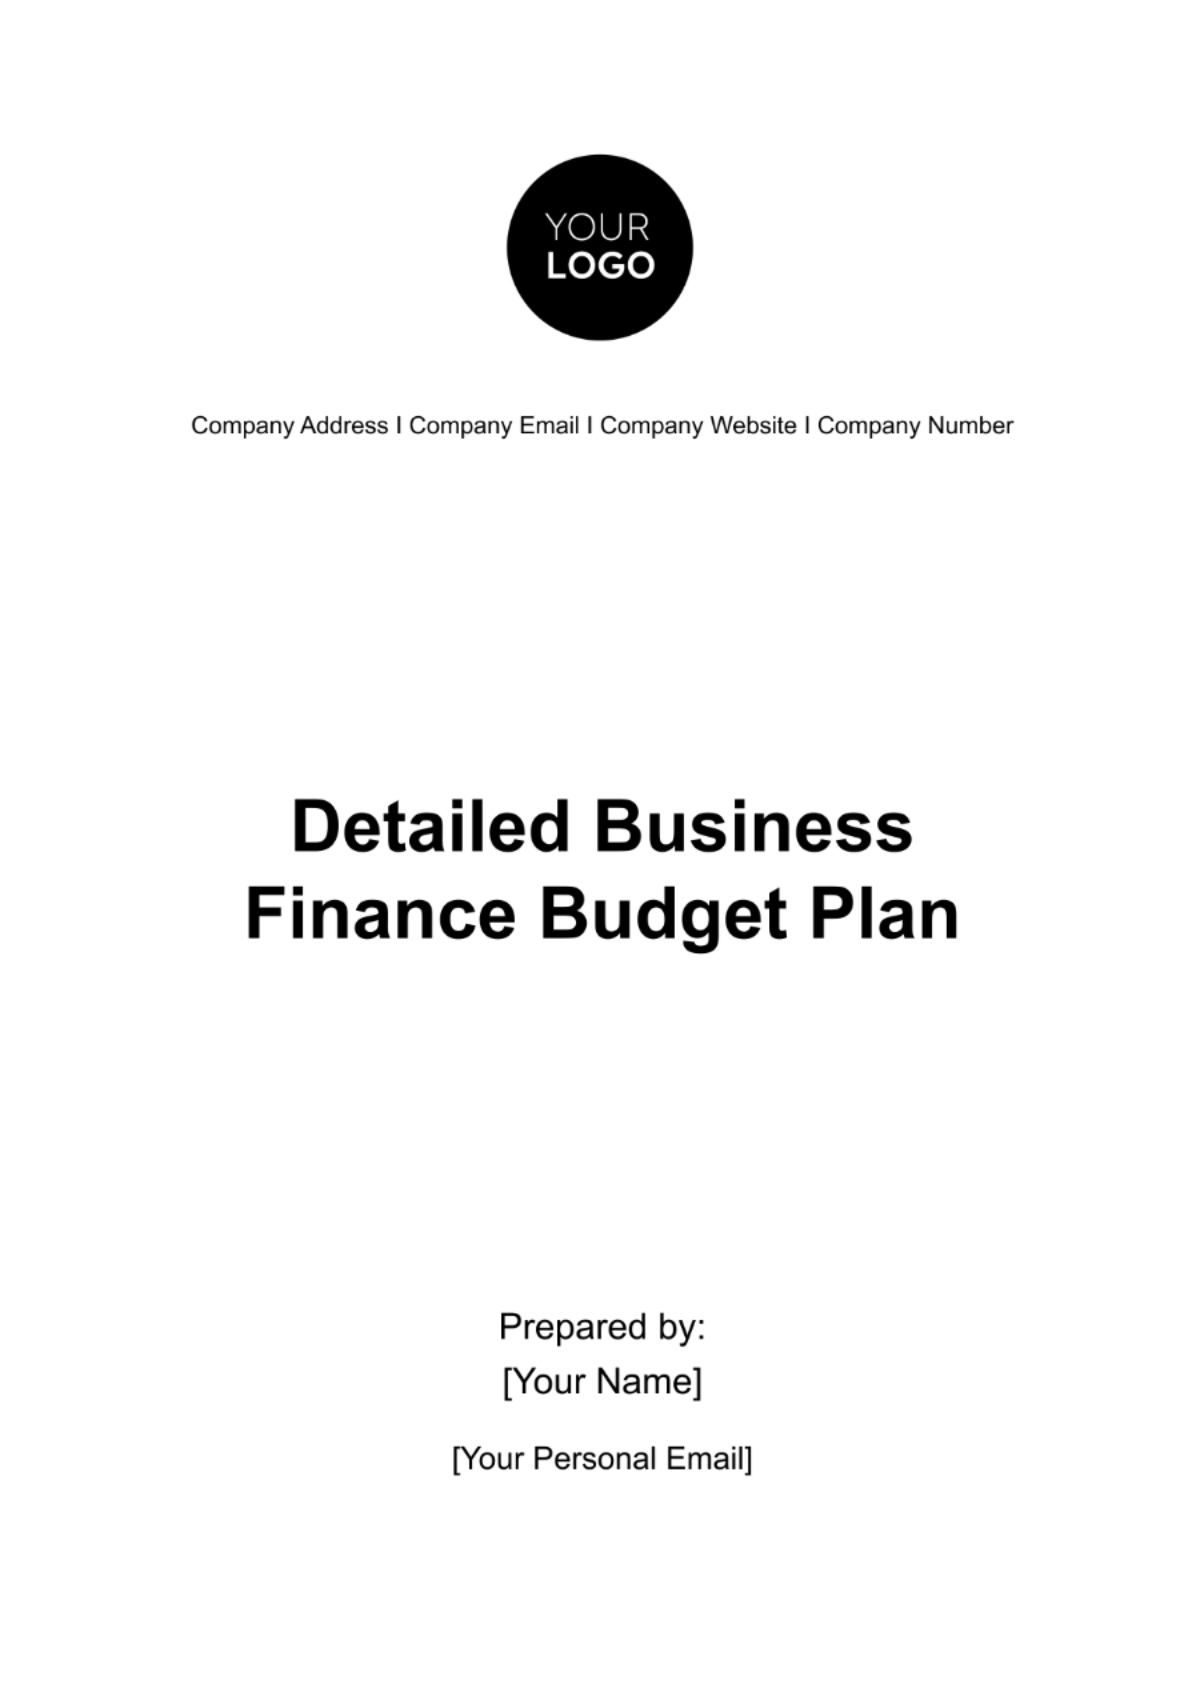 Detailed Business Finance Budget Plan Template